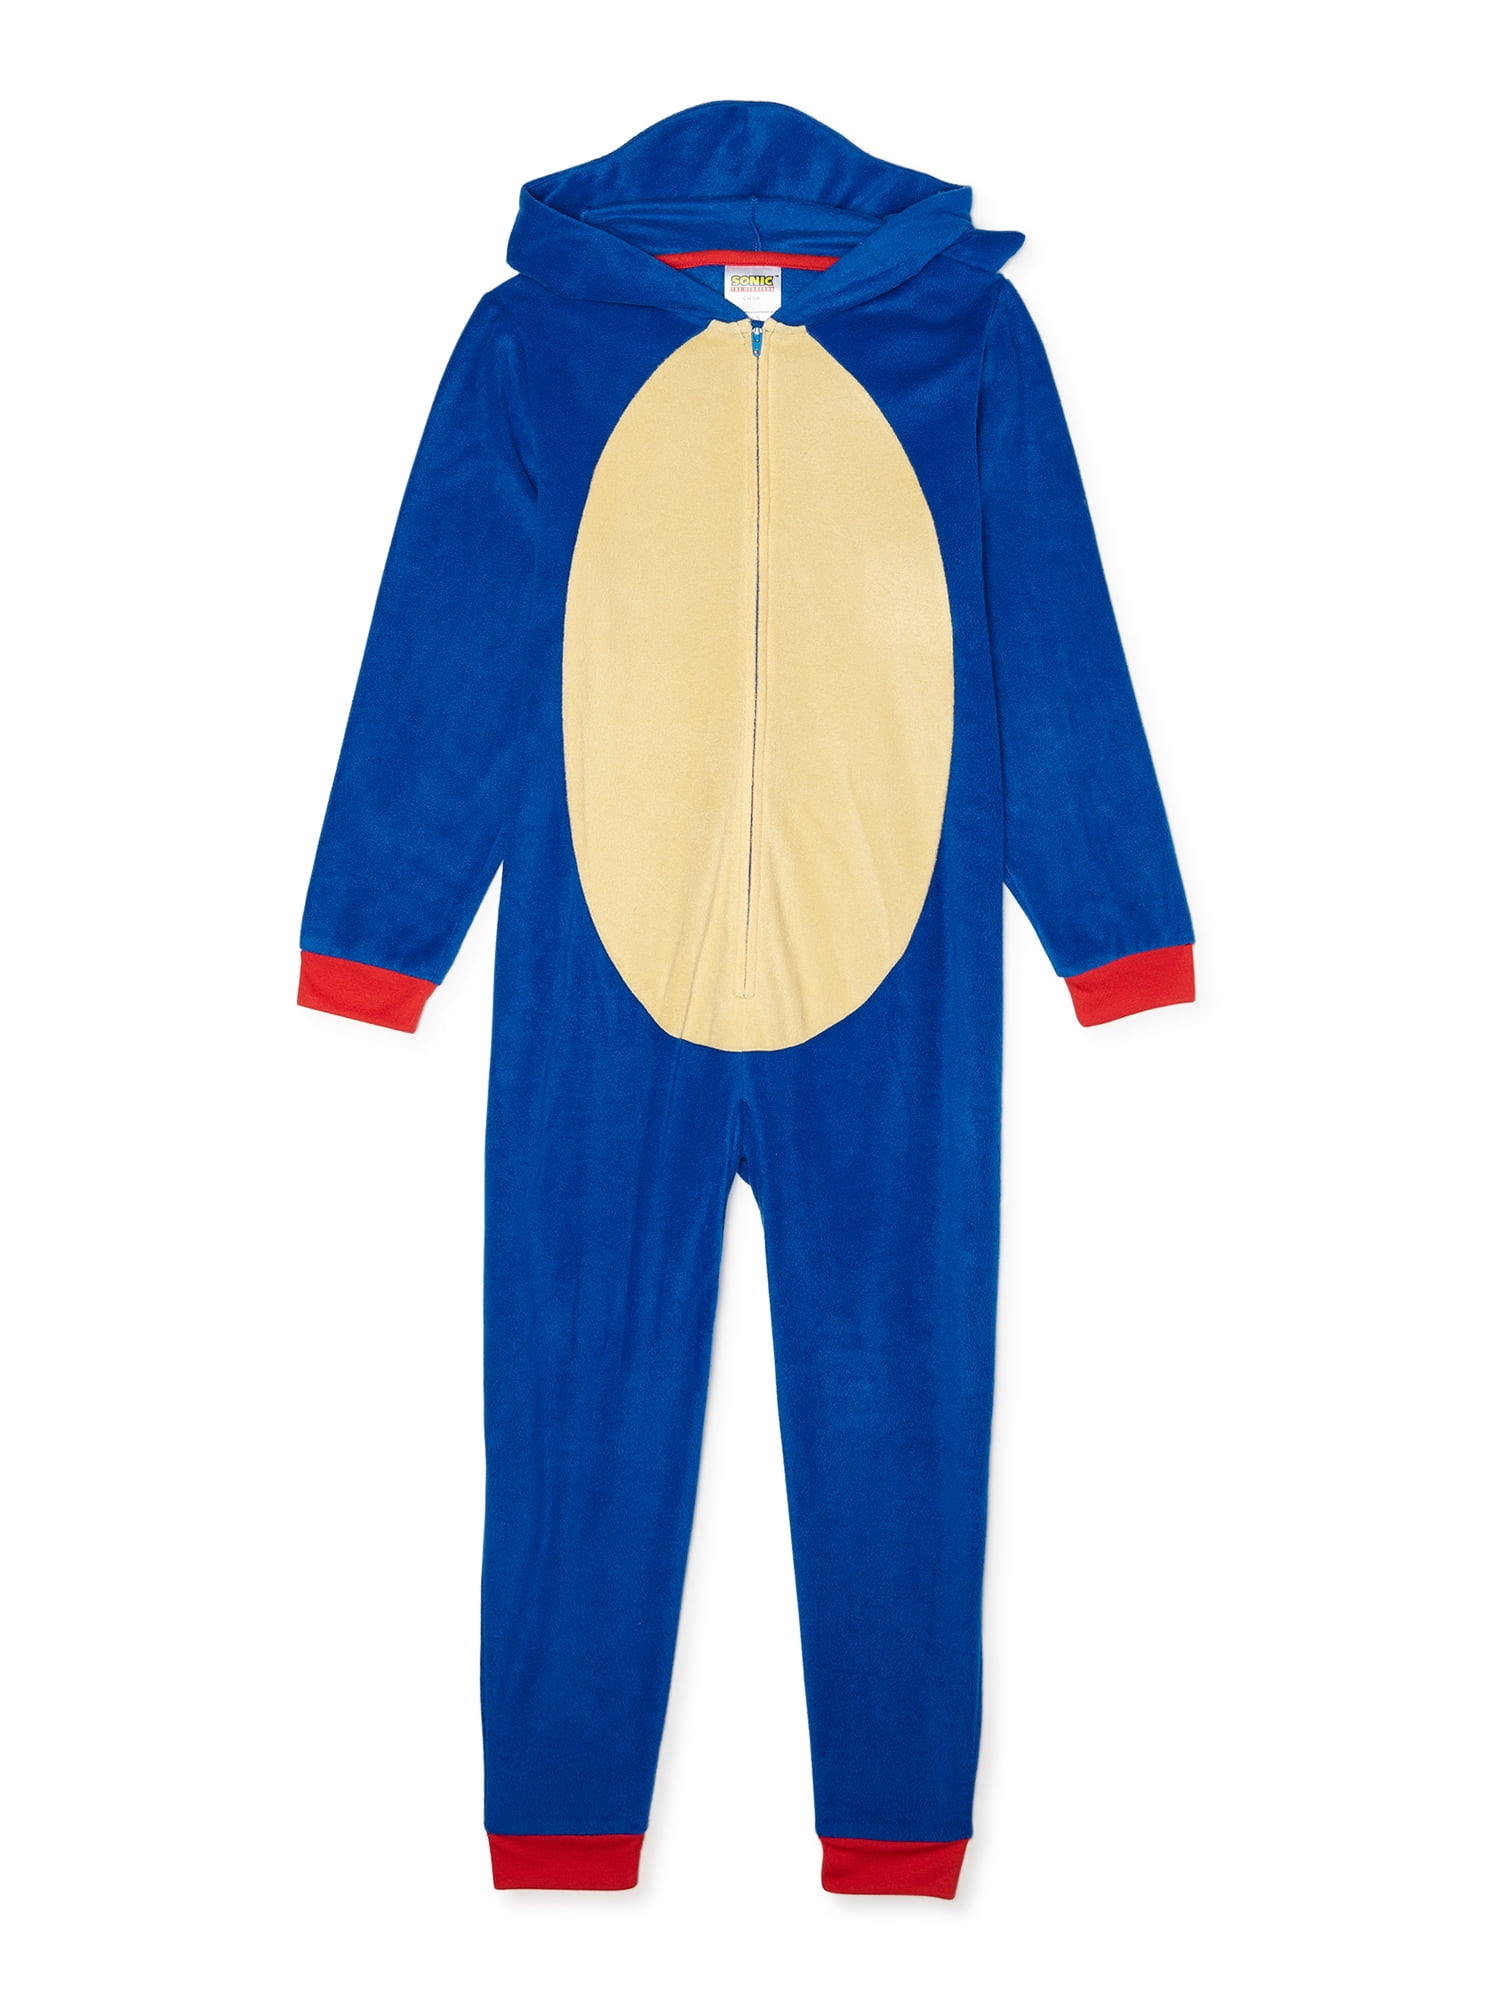 VIMMUCIR Kawaii Sonic The Hedgehog Hooded Throw Blanket Warm Wearable Blankets Novelty Cape for Kids 50x60 Inch